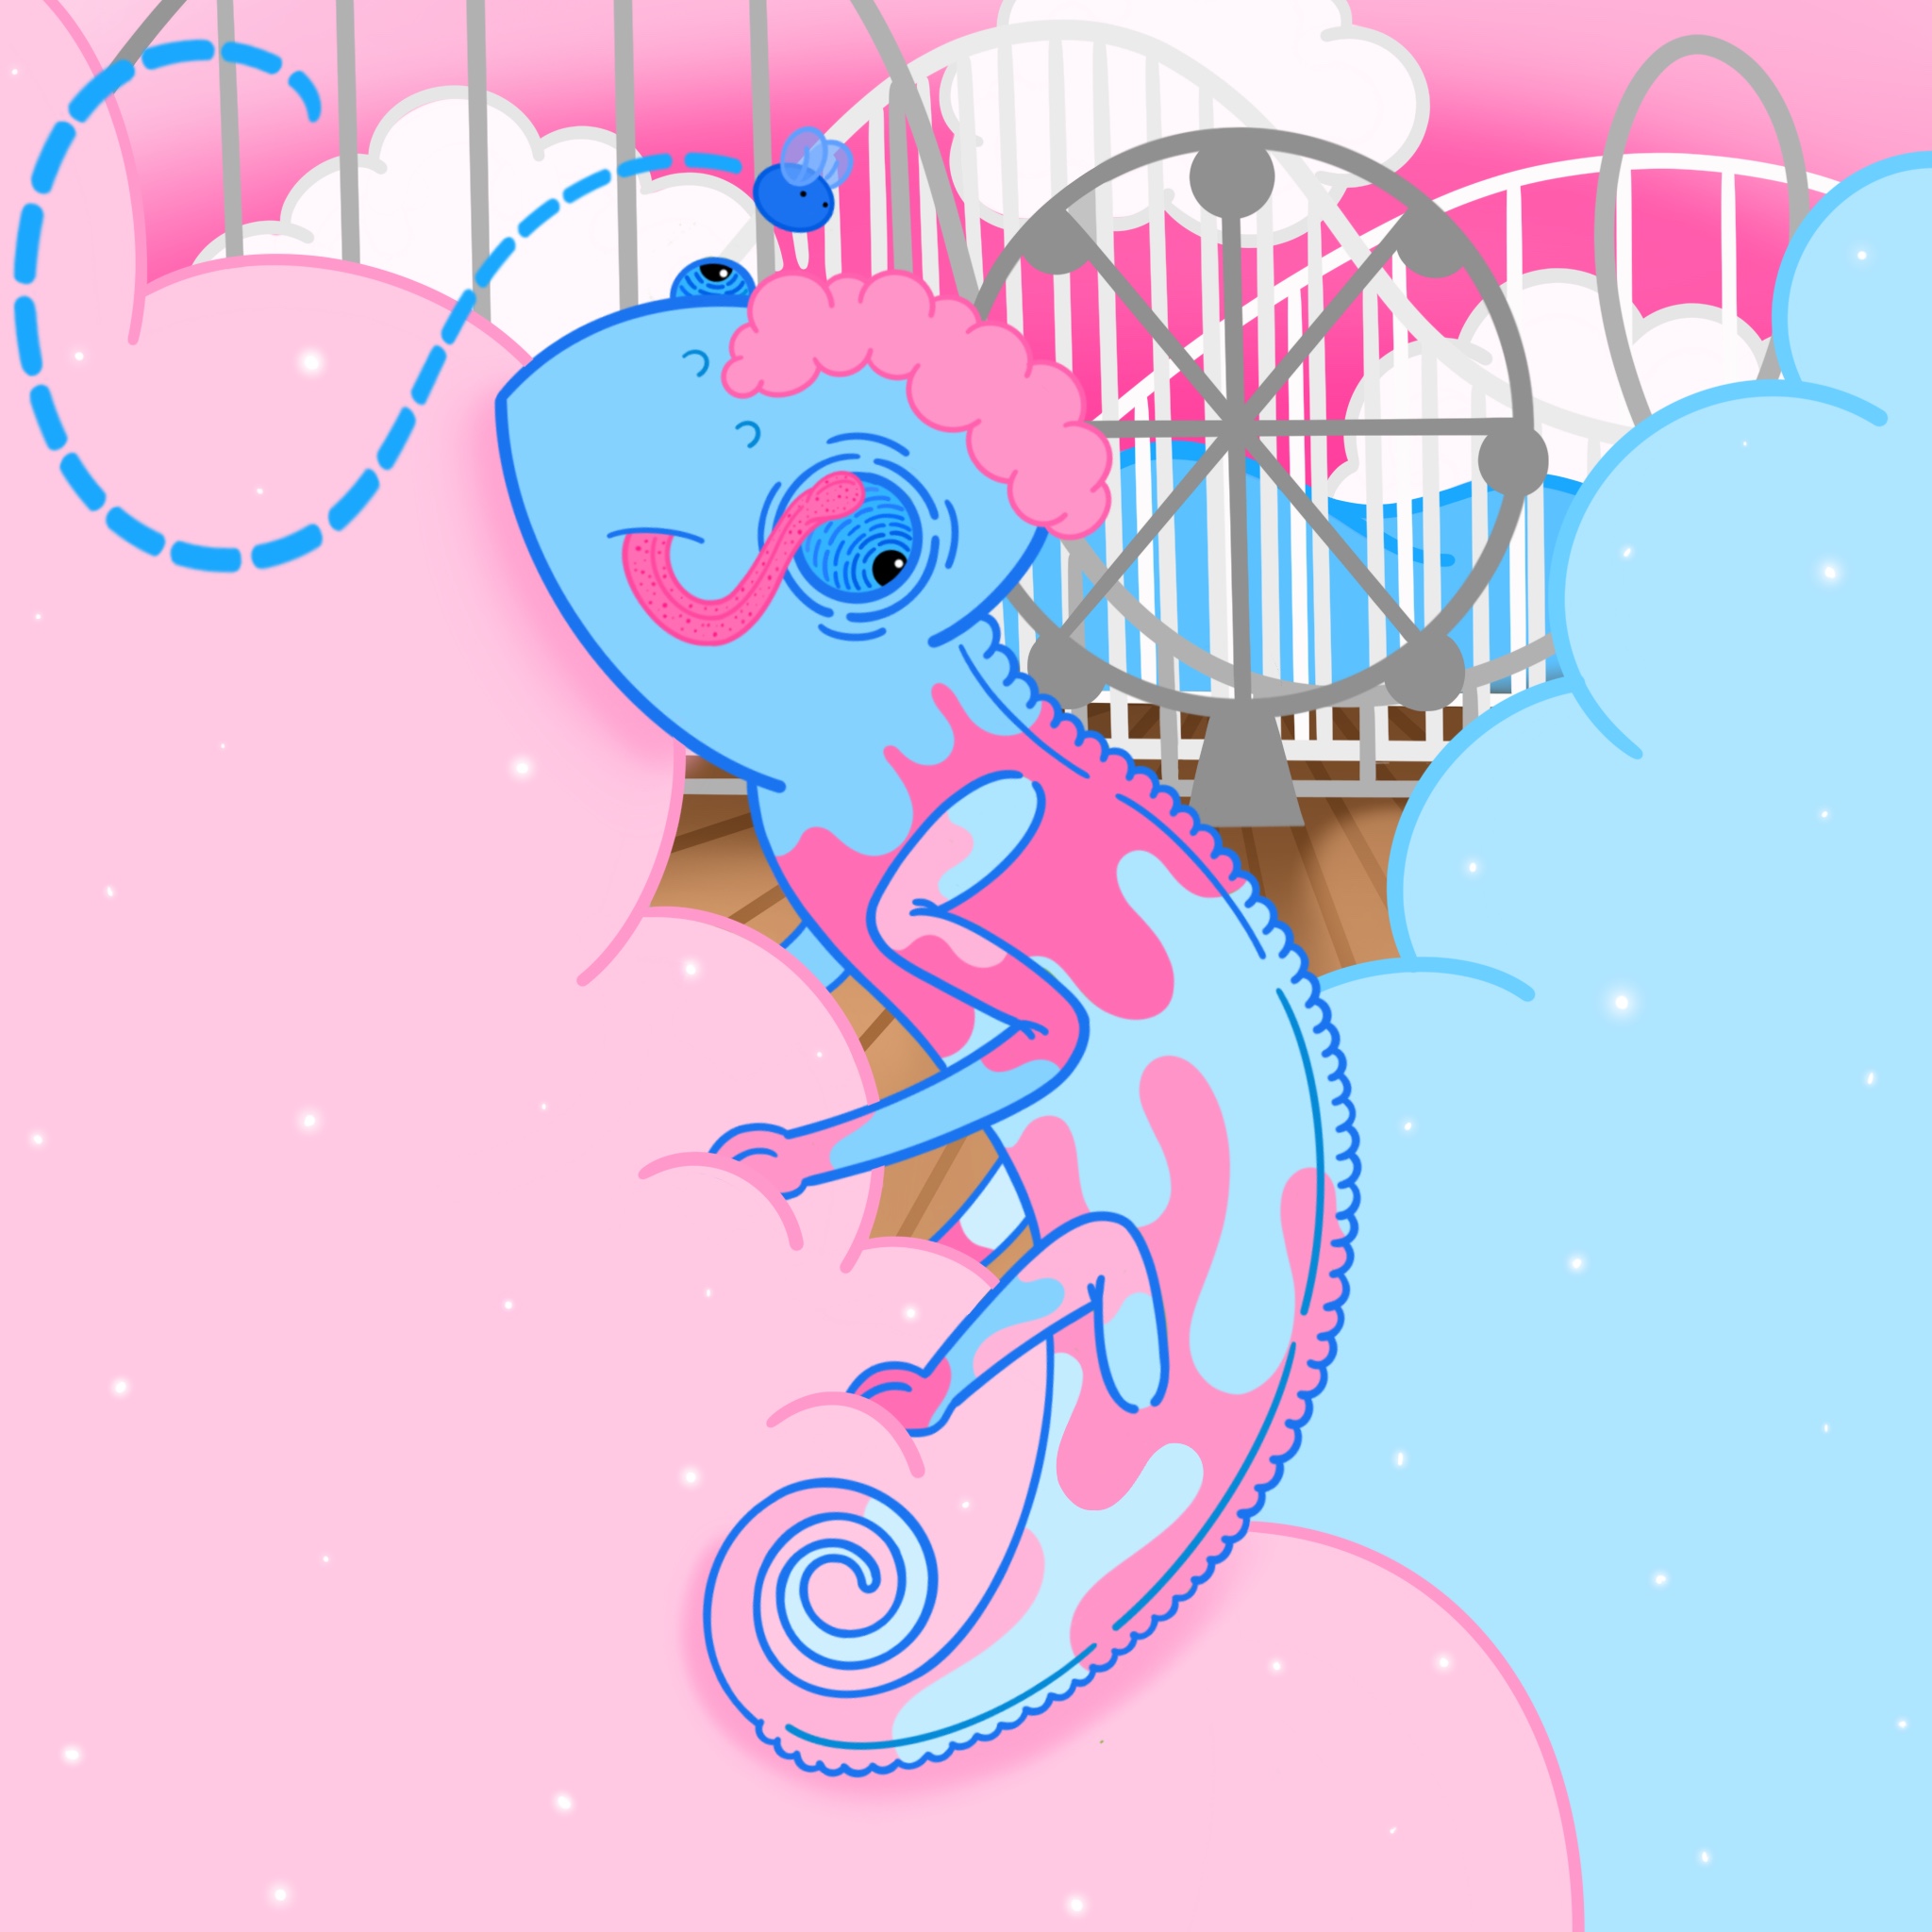 Cotton Candy Chameleon digital illustration.